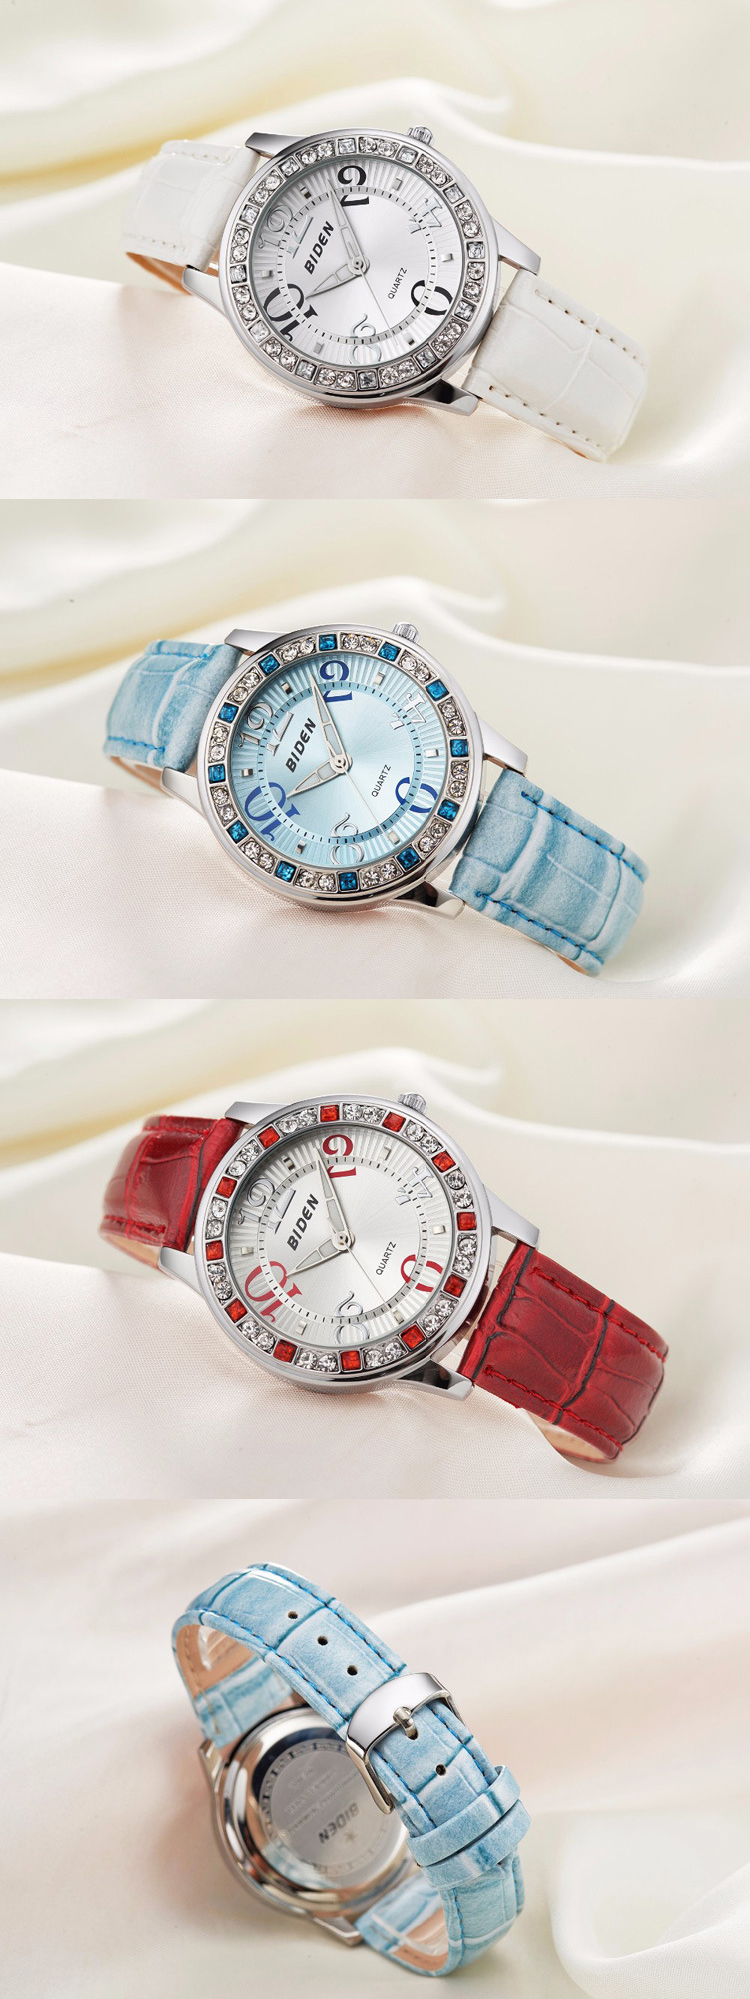 BIDEN-BD1110-Classic-Crystal-Women-Wrist-Watch-Leather-Strap-Casual-Quartz-Watch-1429685